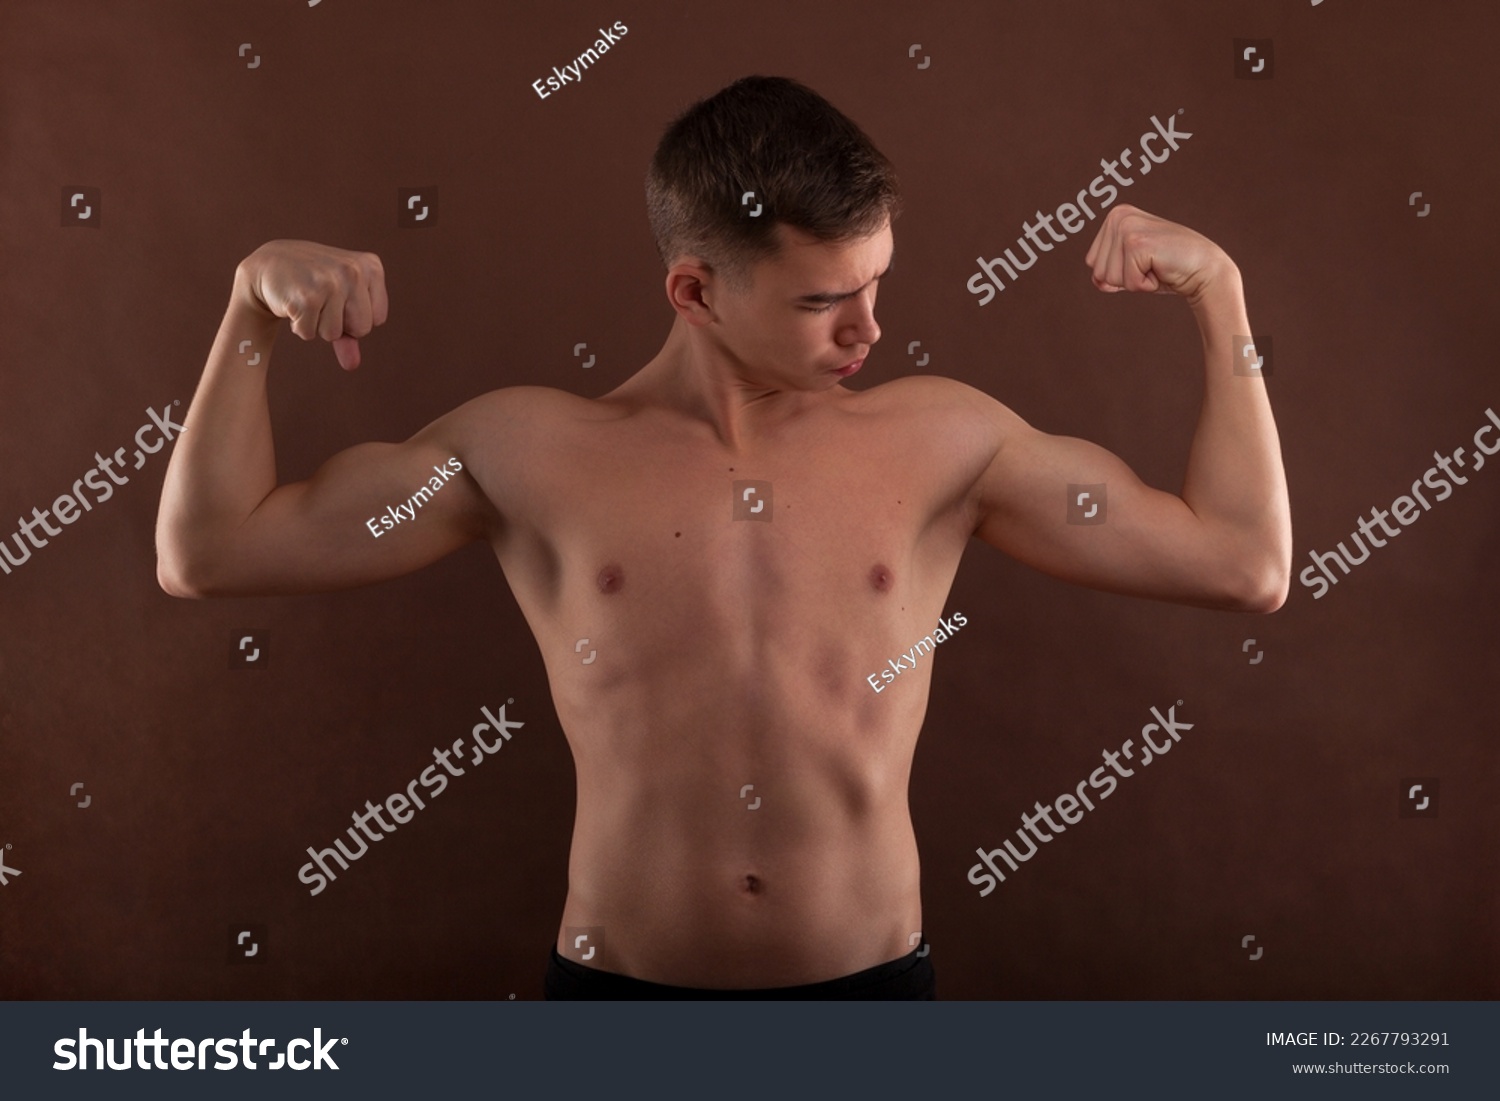 Handsome muscular shirtless adolescent boy flexing muscles. #2267793291